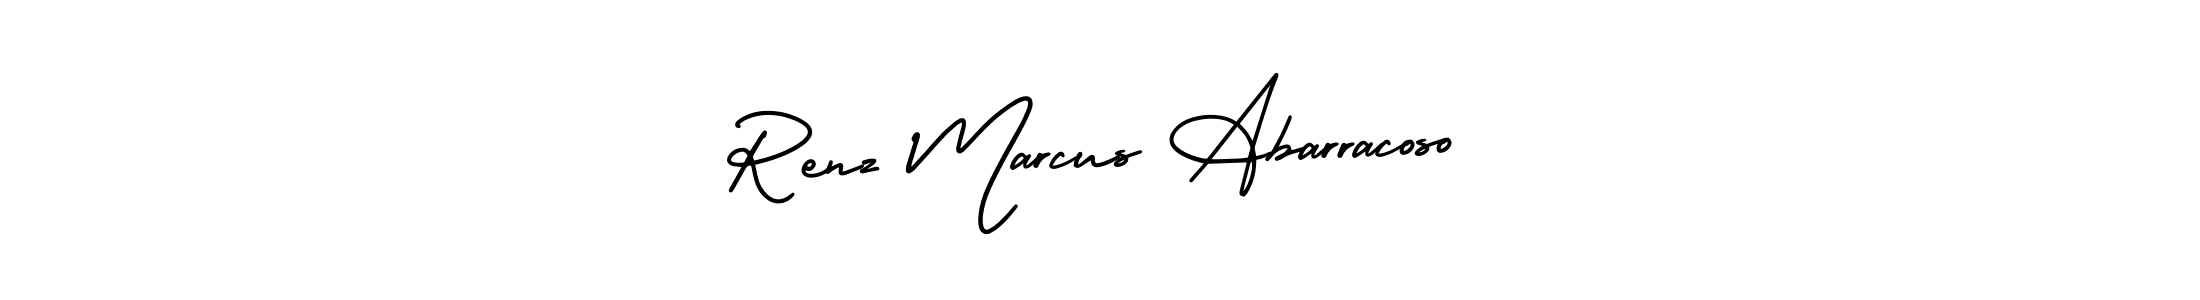 Best and Professional Signature Style for Renz Marcus Abarracoso. AmerikaSignatureDemo-Regular Best Signature Style Collection. Renz Marcus Abarracoso signature style 3 images and pictures png